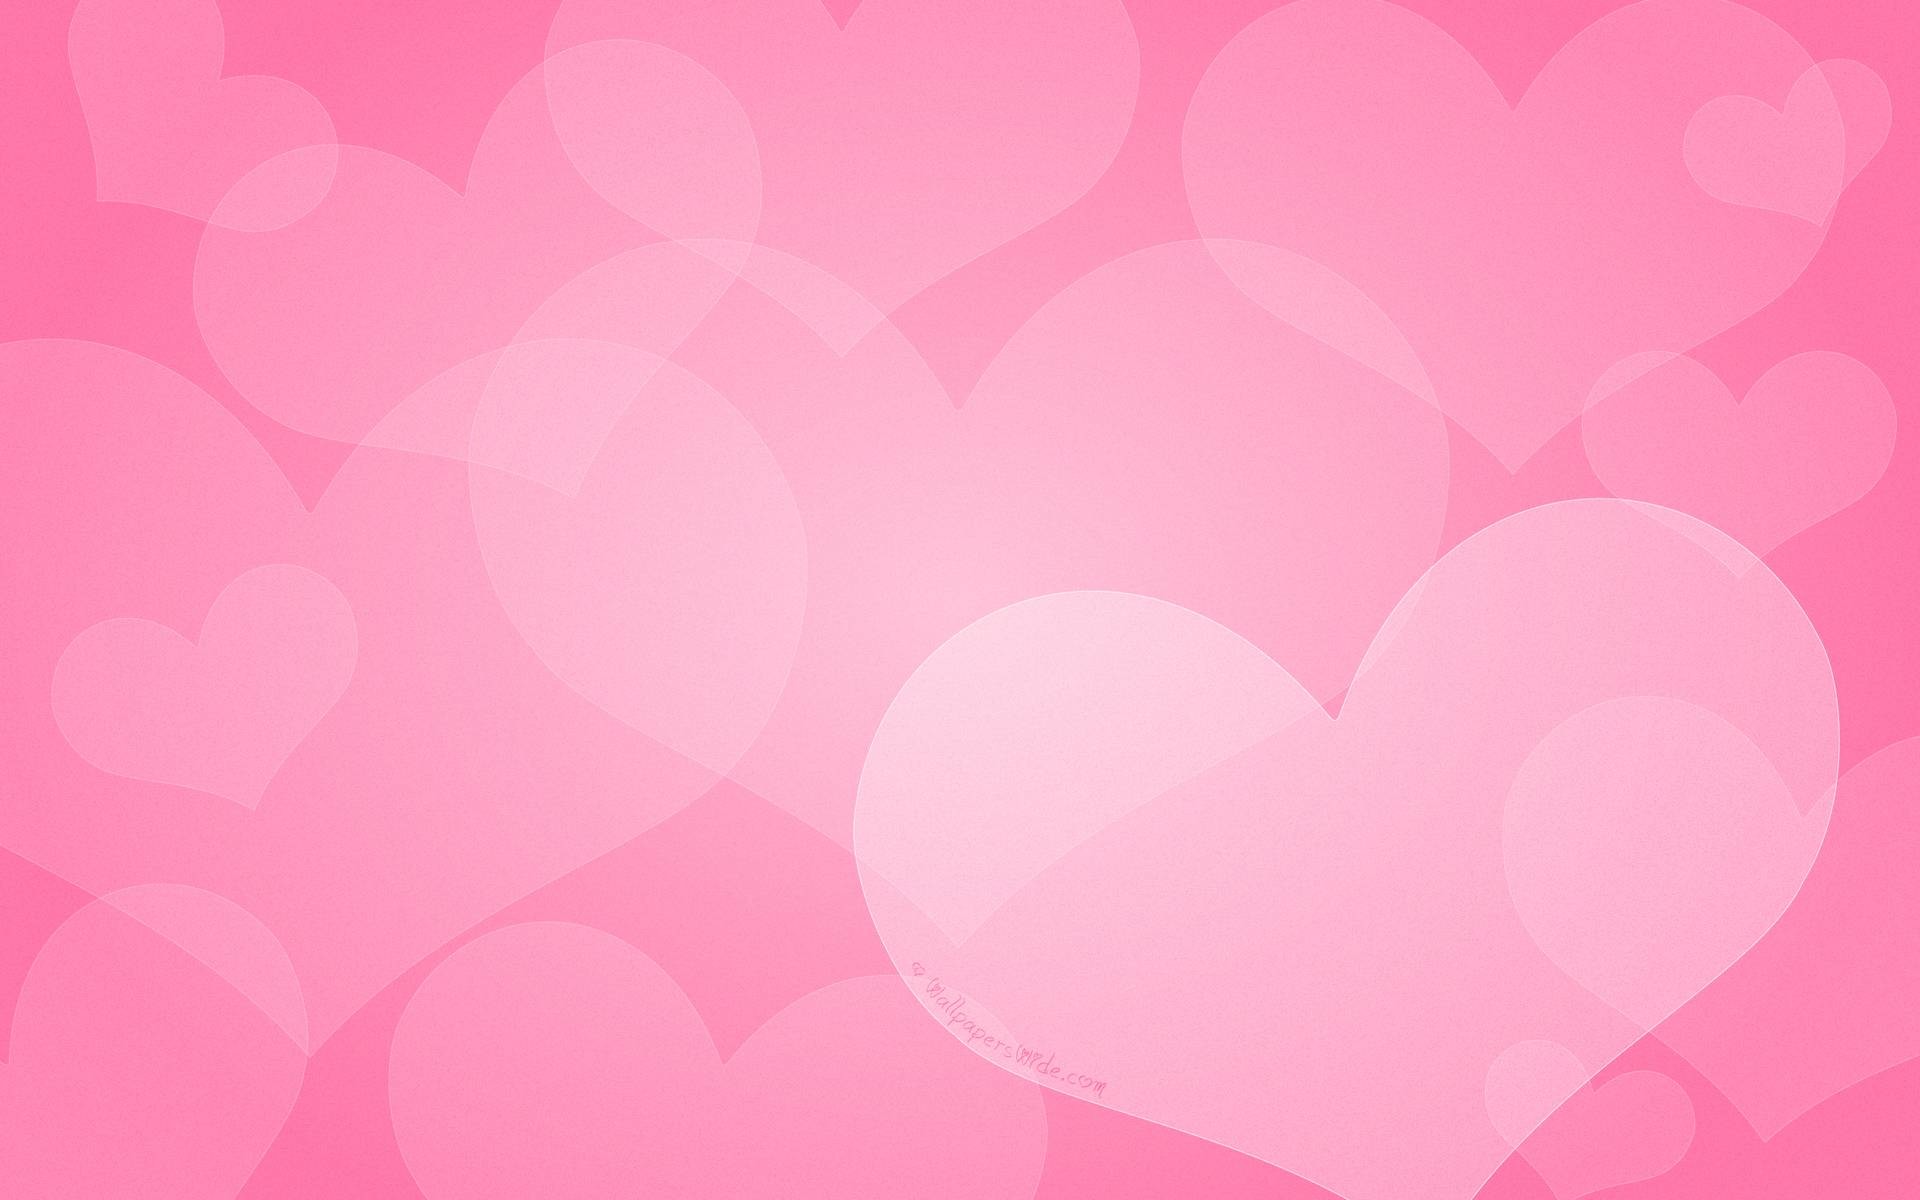 Valentines Desktop Background Image